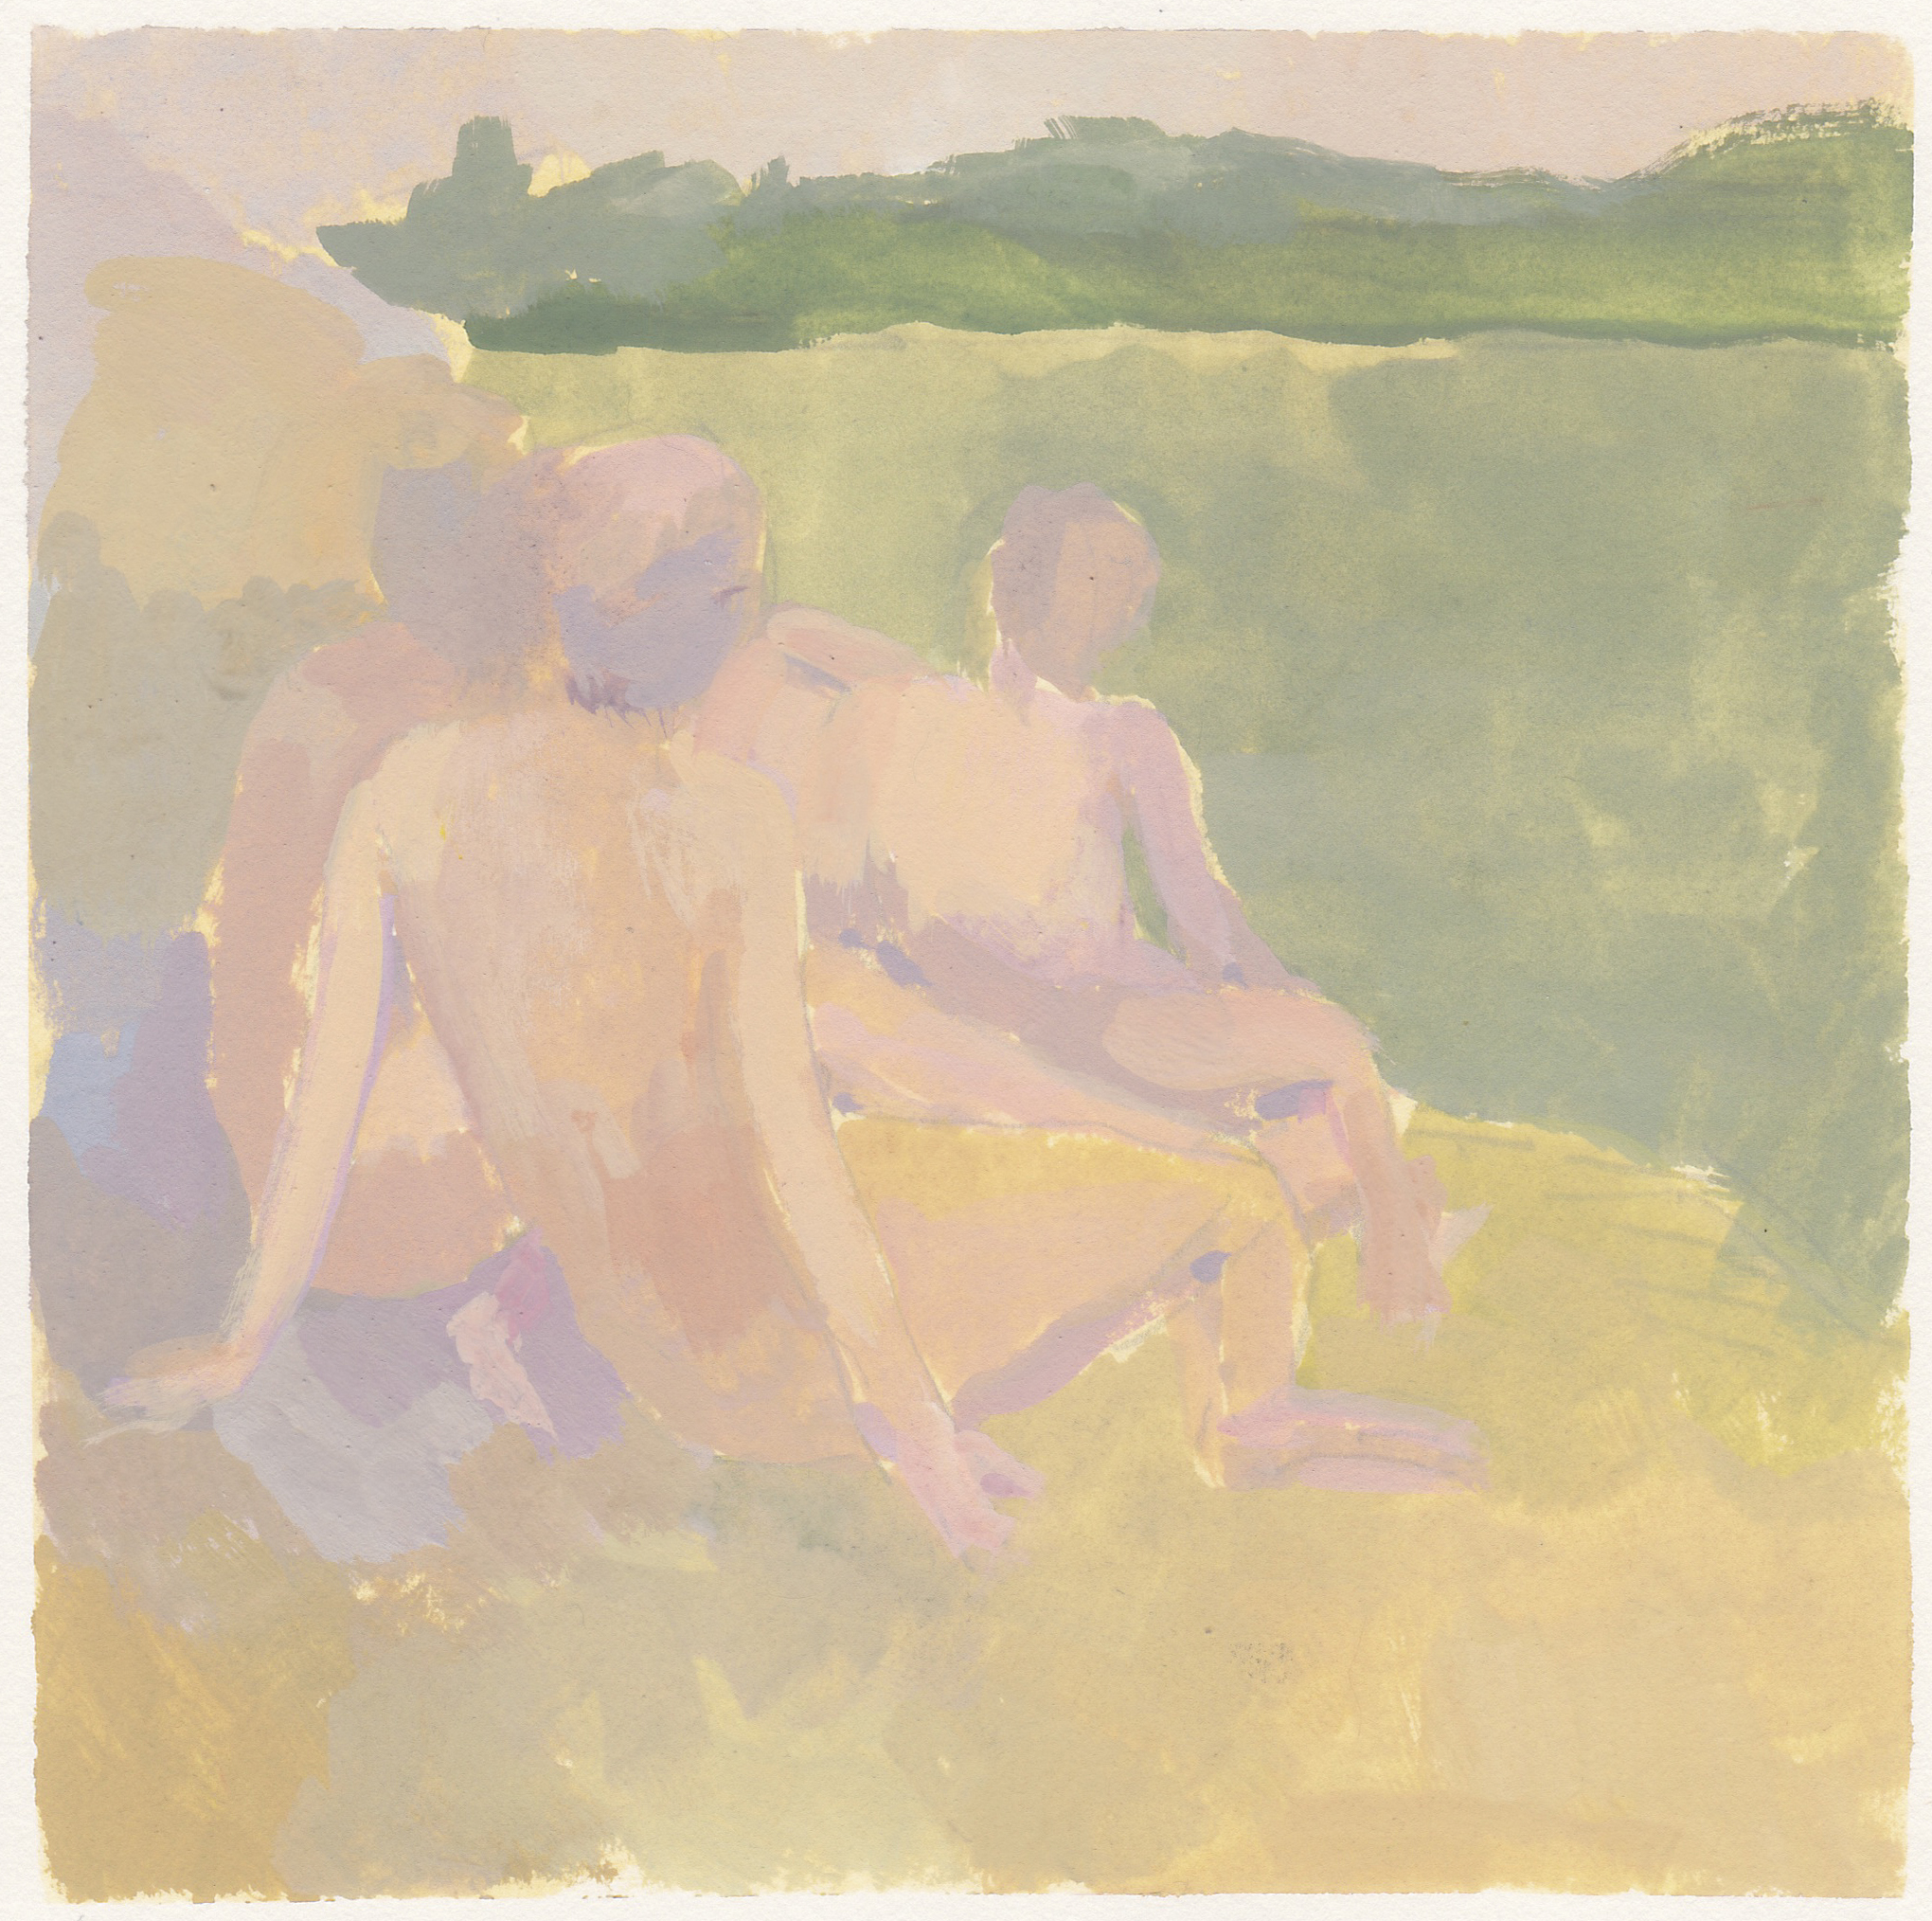    mirror lake     gouache on paper 6.5 x 6.5” 2018  private collection California 